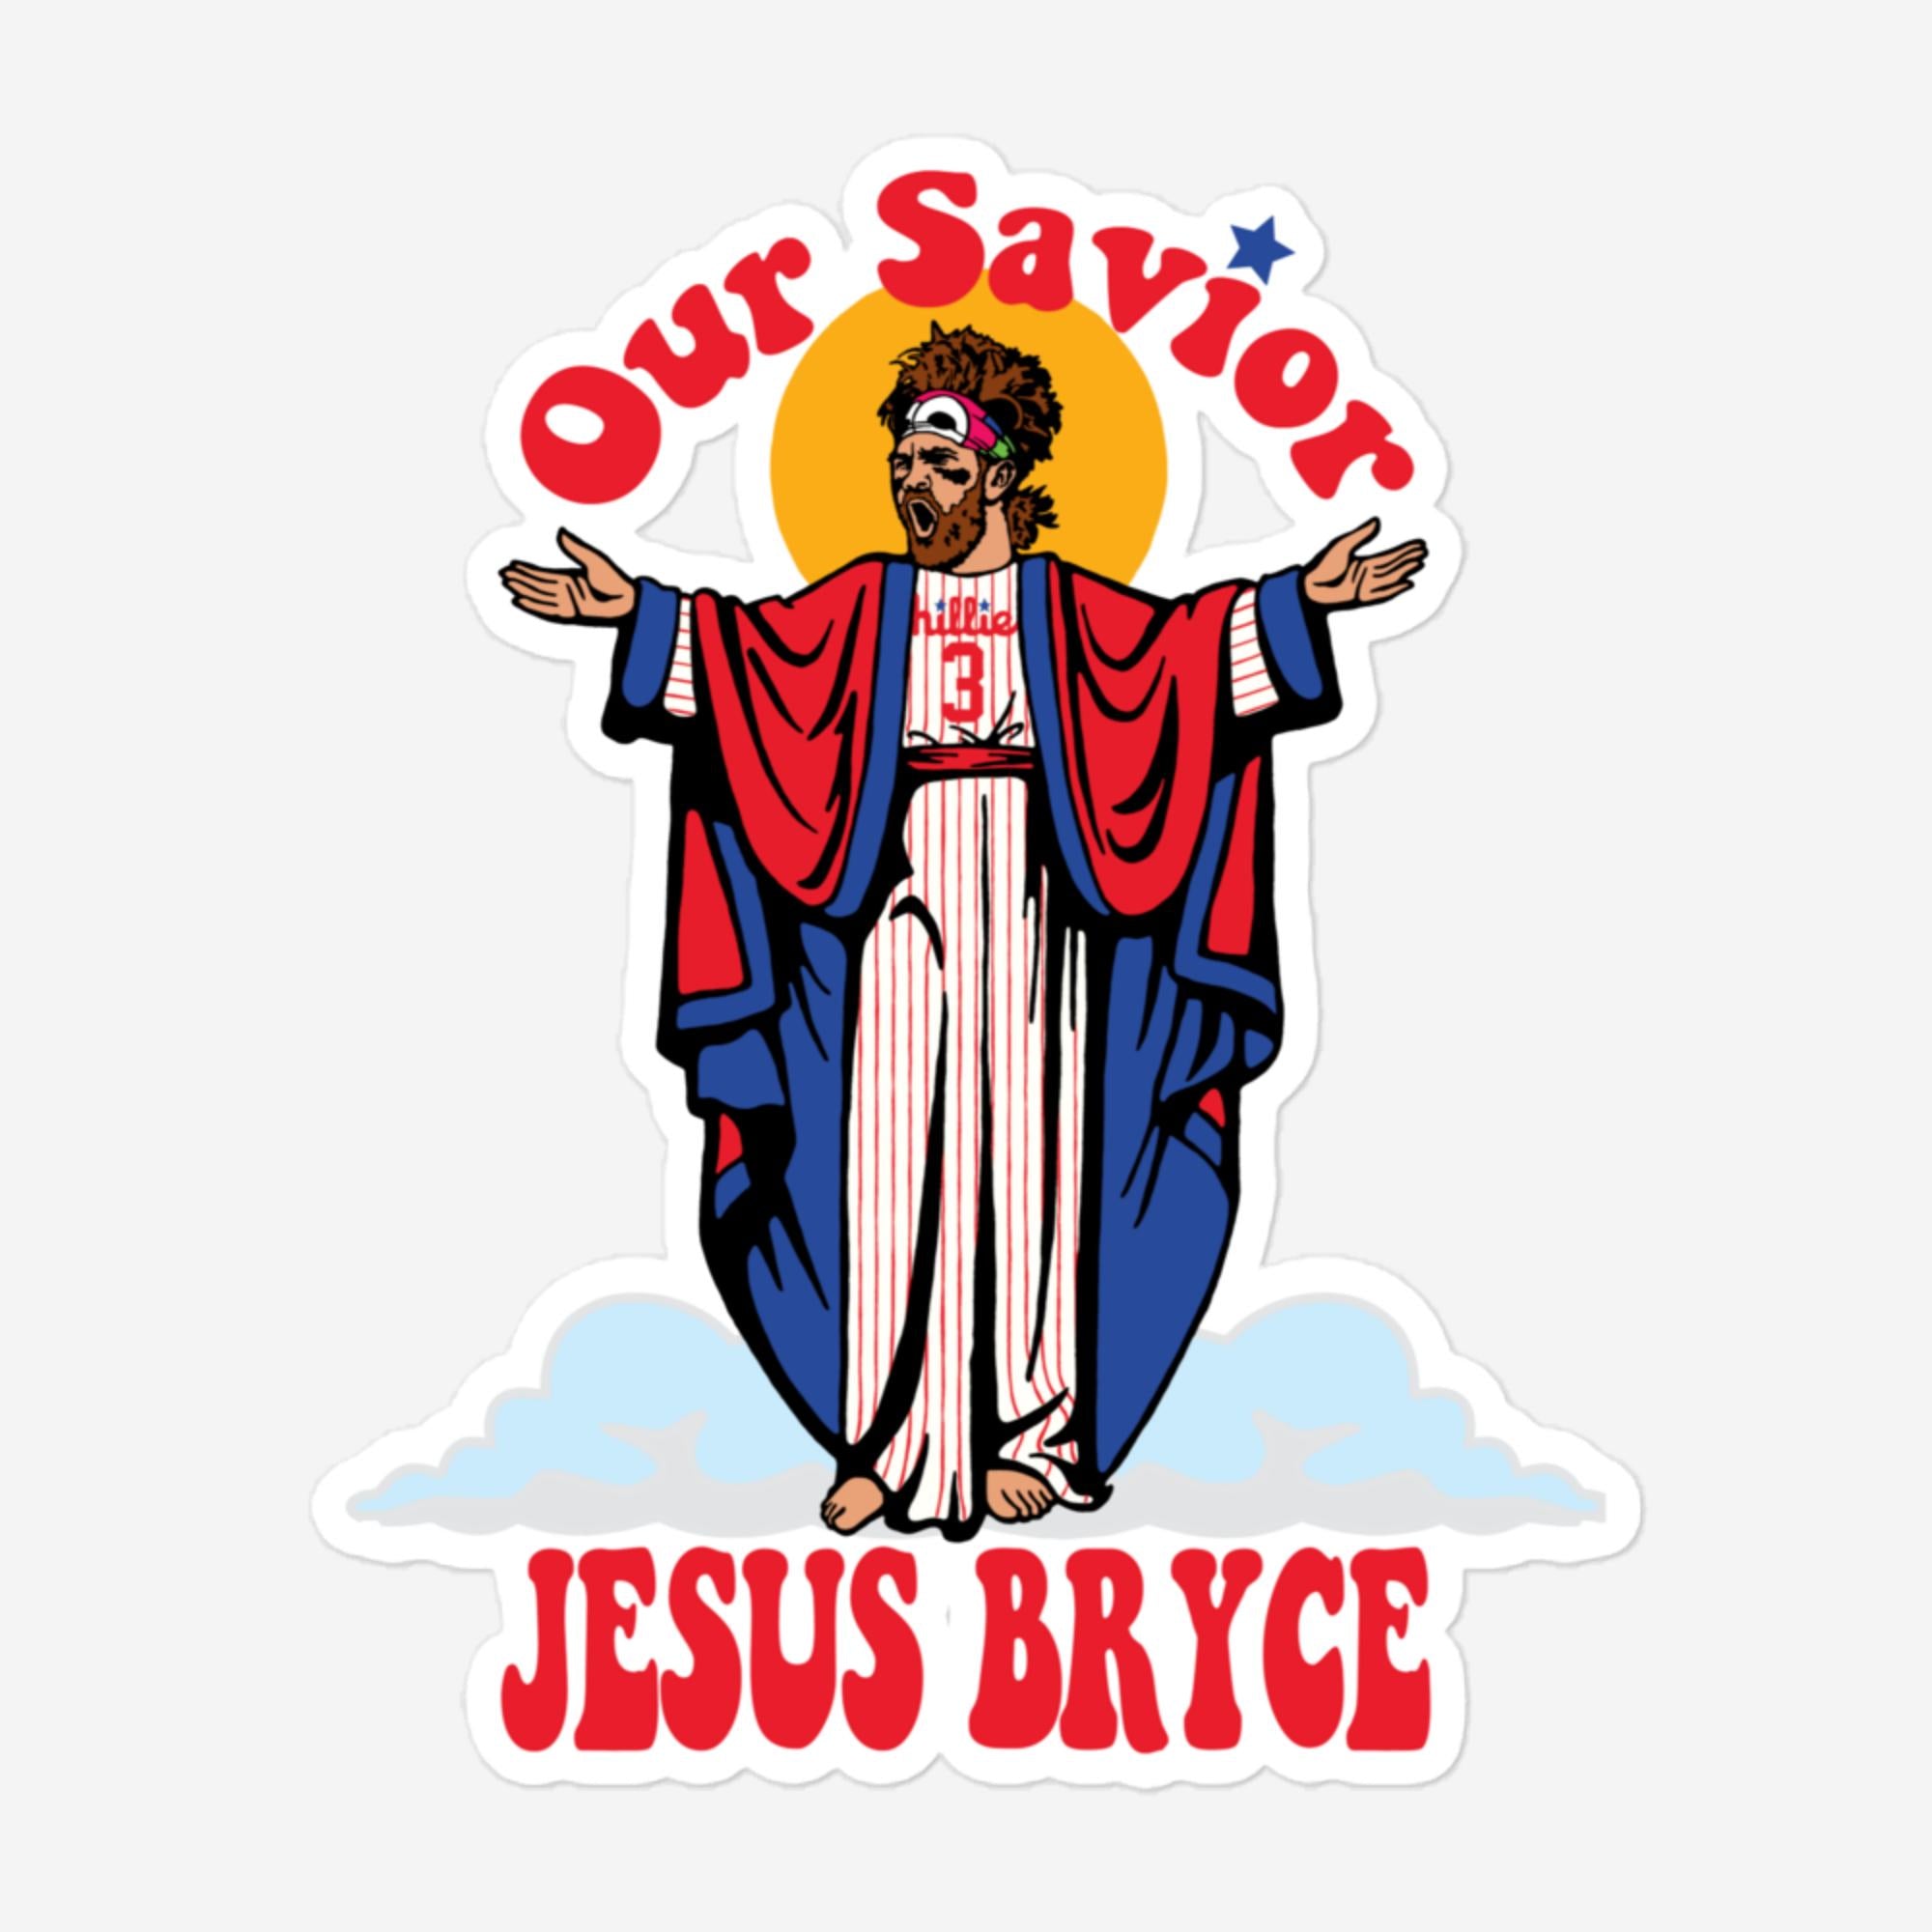 "Our Savior Jesus Bryce" Sticker